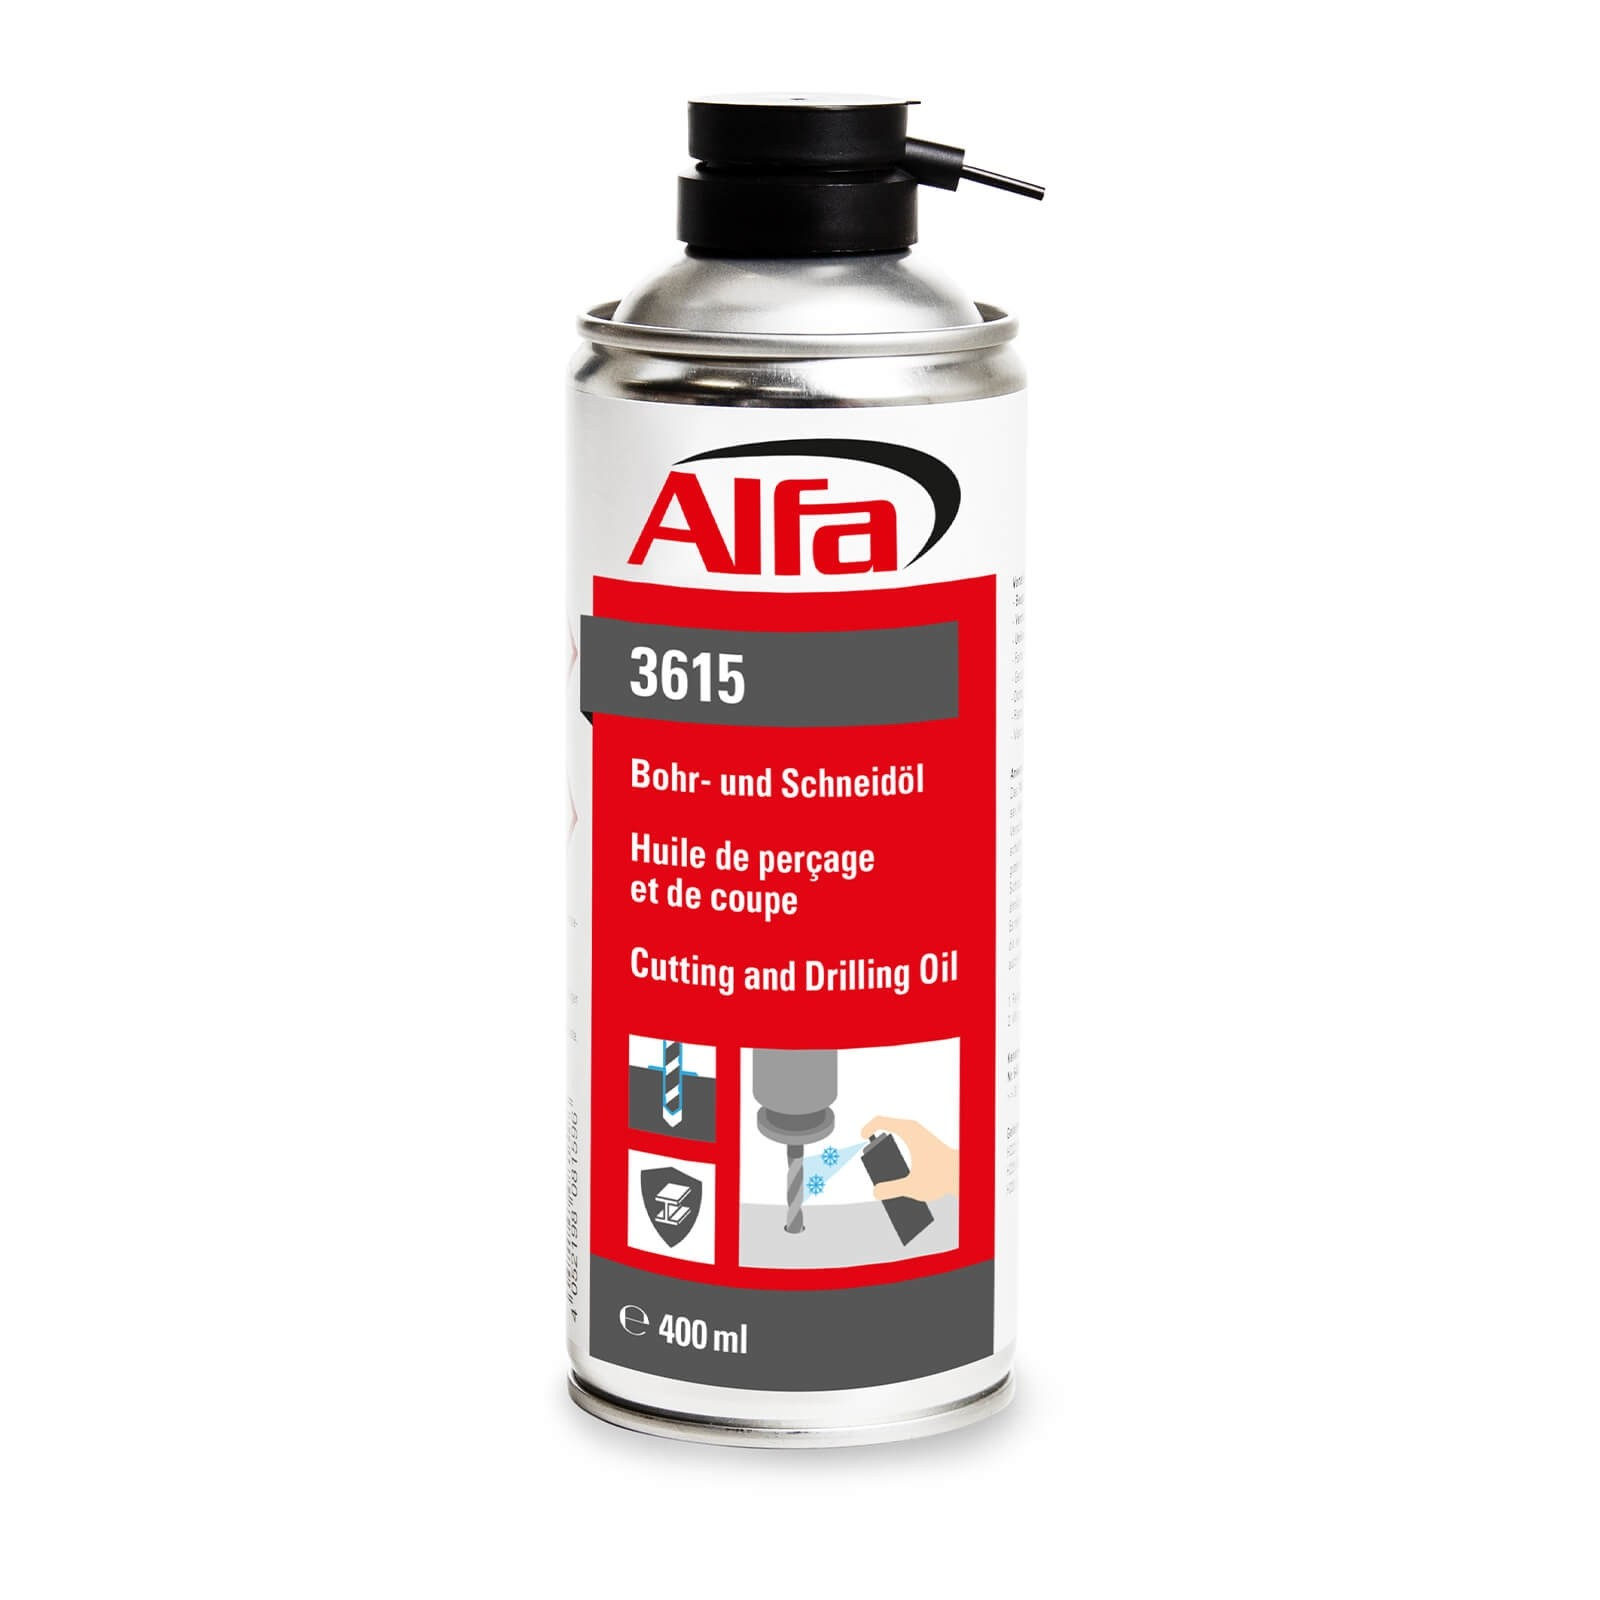 https://media.alfa-direct.fr/catalog/product/a/l/alfa-huile-de-forage-et-de-coupe.jpg